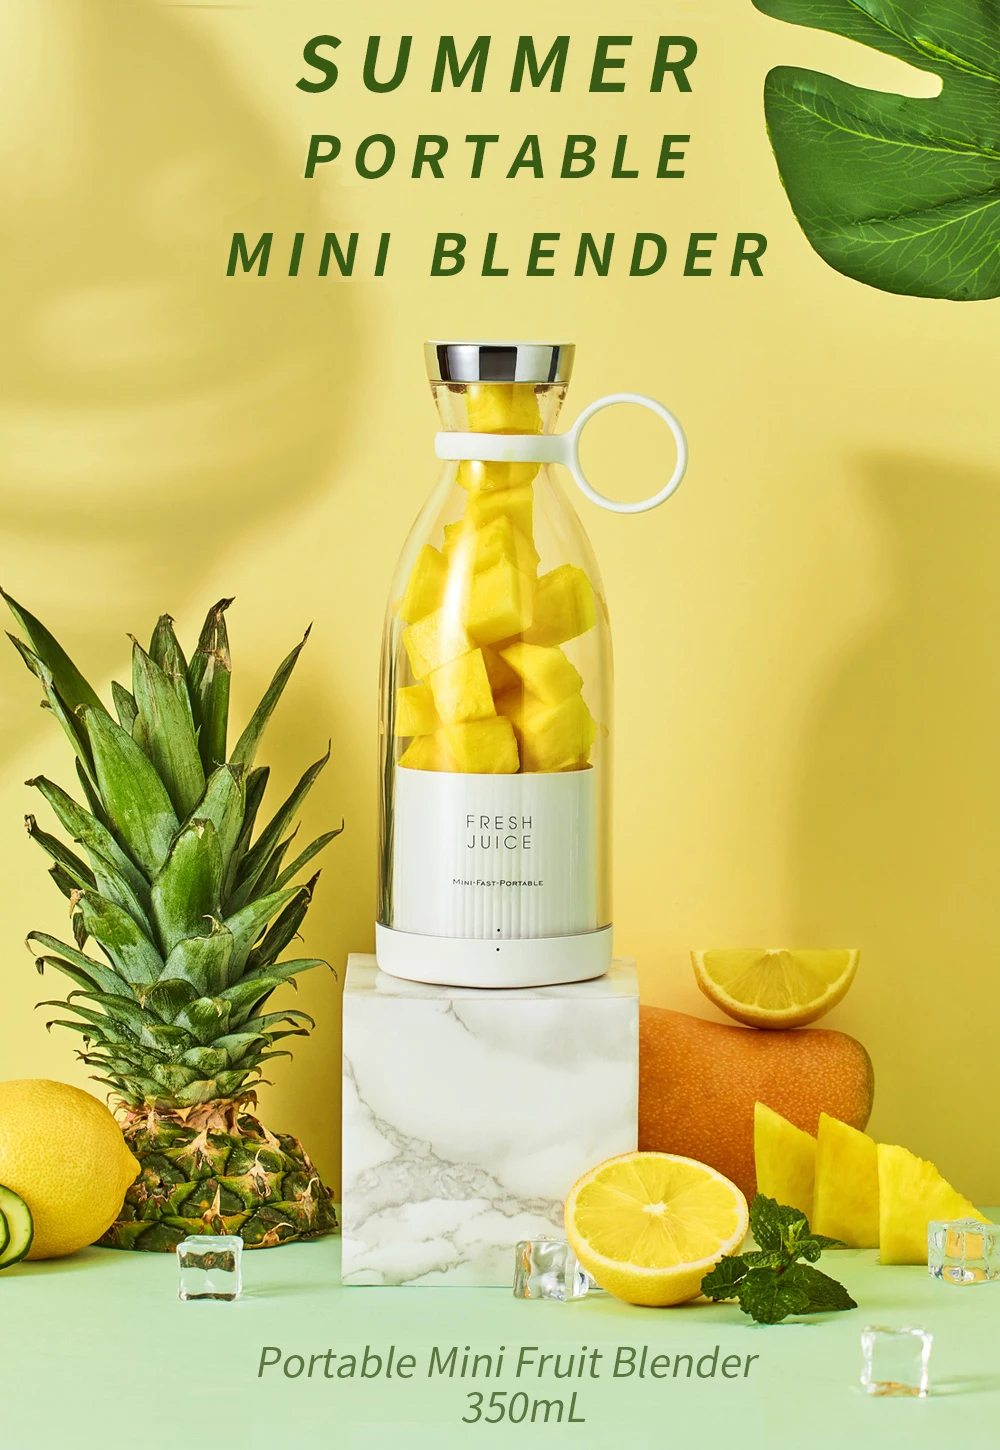 4 Blades 350ml Portable Juicer Blender As Seen On Tv Mini Juicer Blender -  Buy Mini Blender Juicer,As Seen On Tv Juicer Blender,Juicer Blender Product  on Alibab…